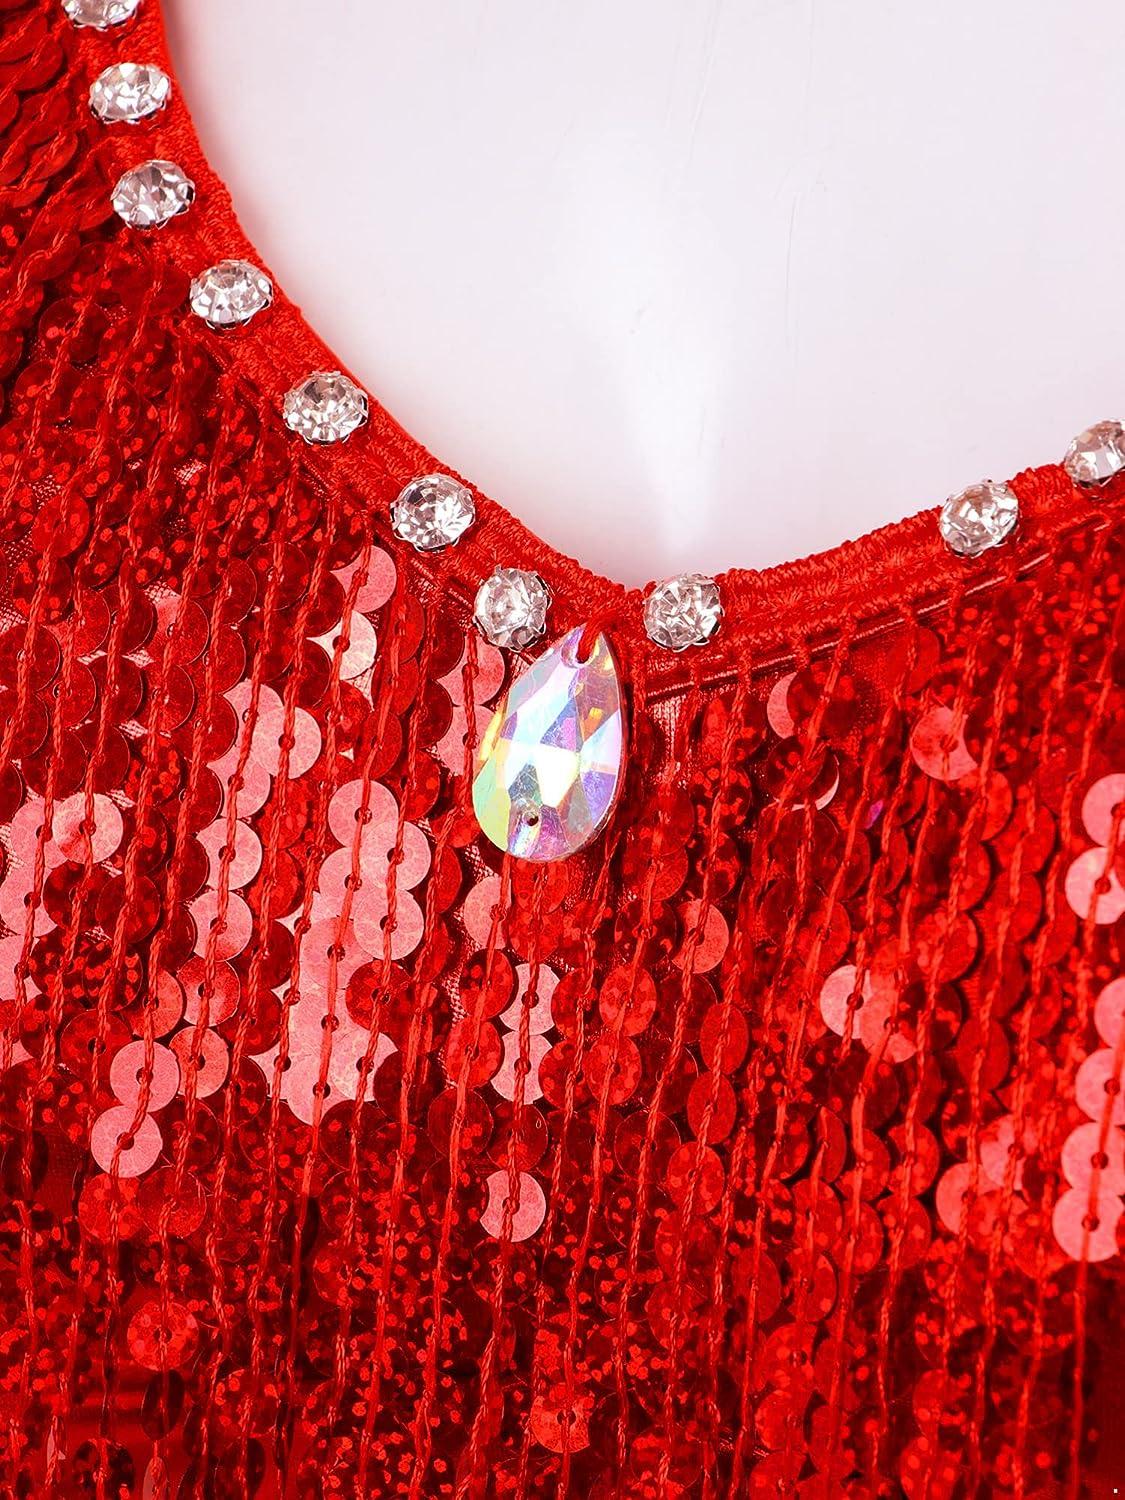 CHICTRY Women's Belly Dance Costume Sequin Shiny Bra Tassel Top Chacha  Tango Dancewear Camisole Tops Red Medium